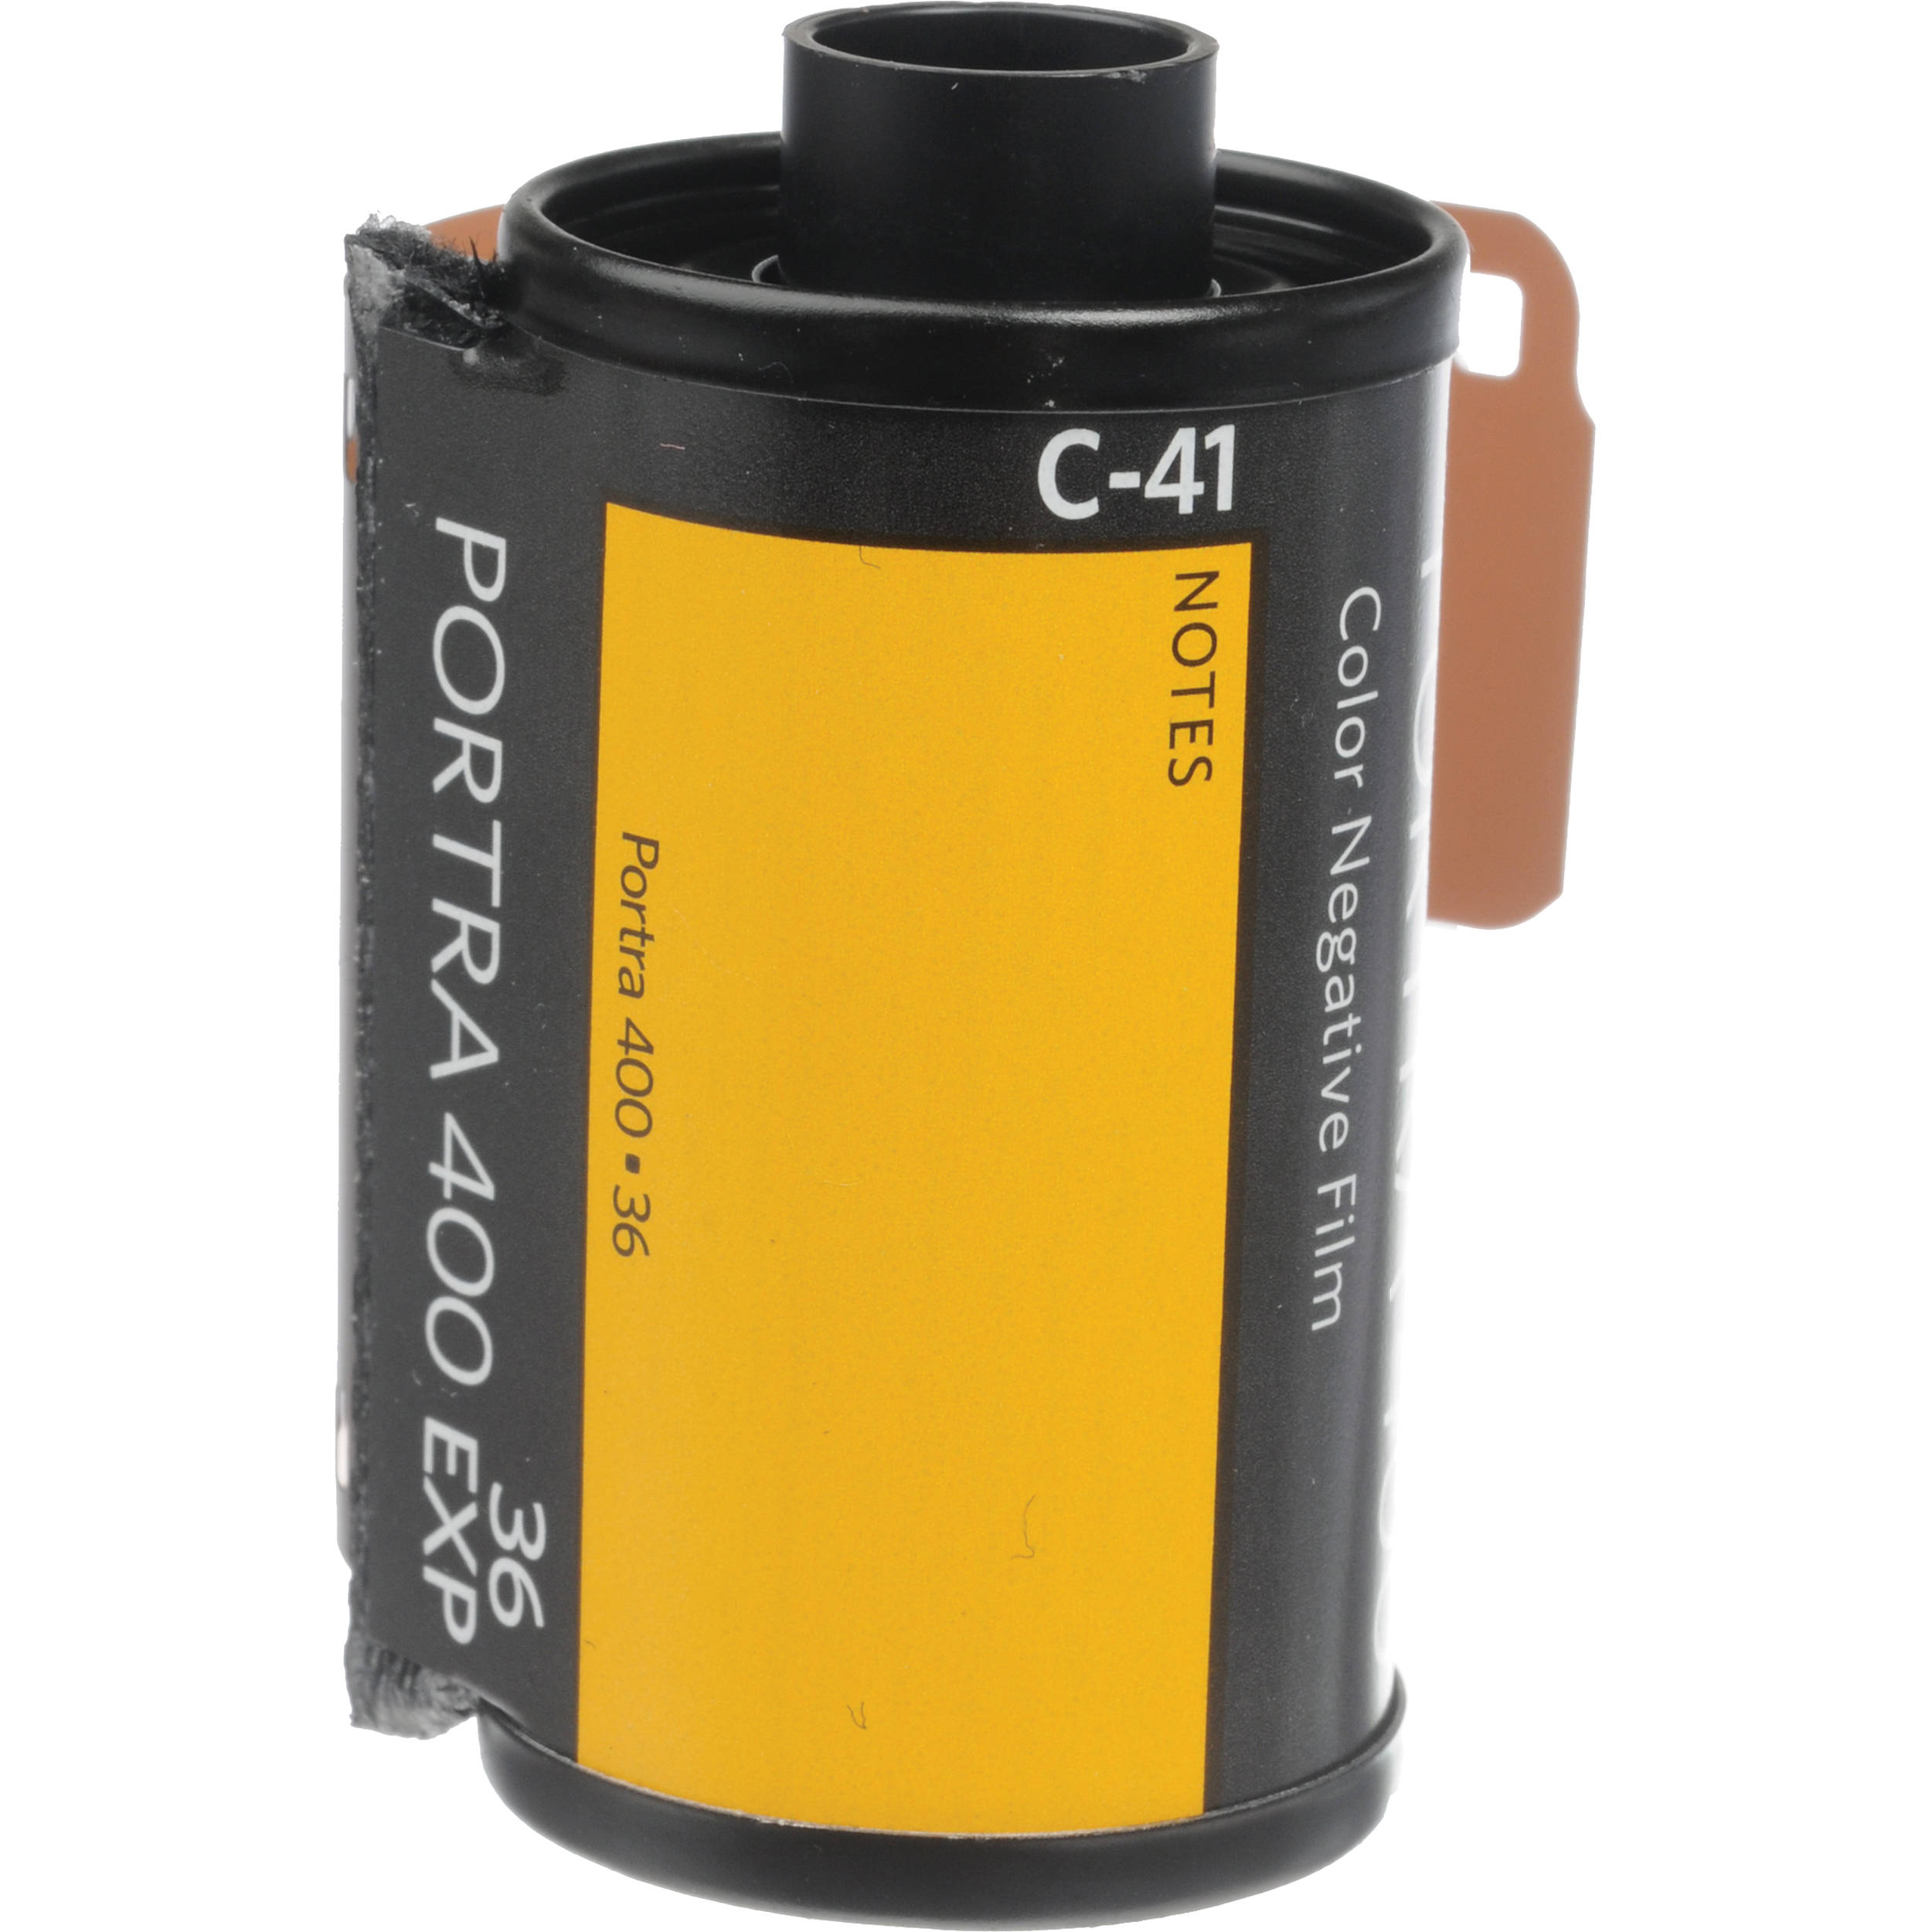 Kodak Professional Portra 400 Color Negative Film 6031678-1 B&H